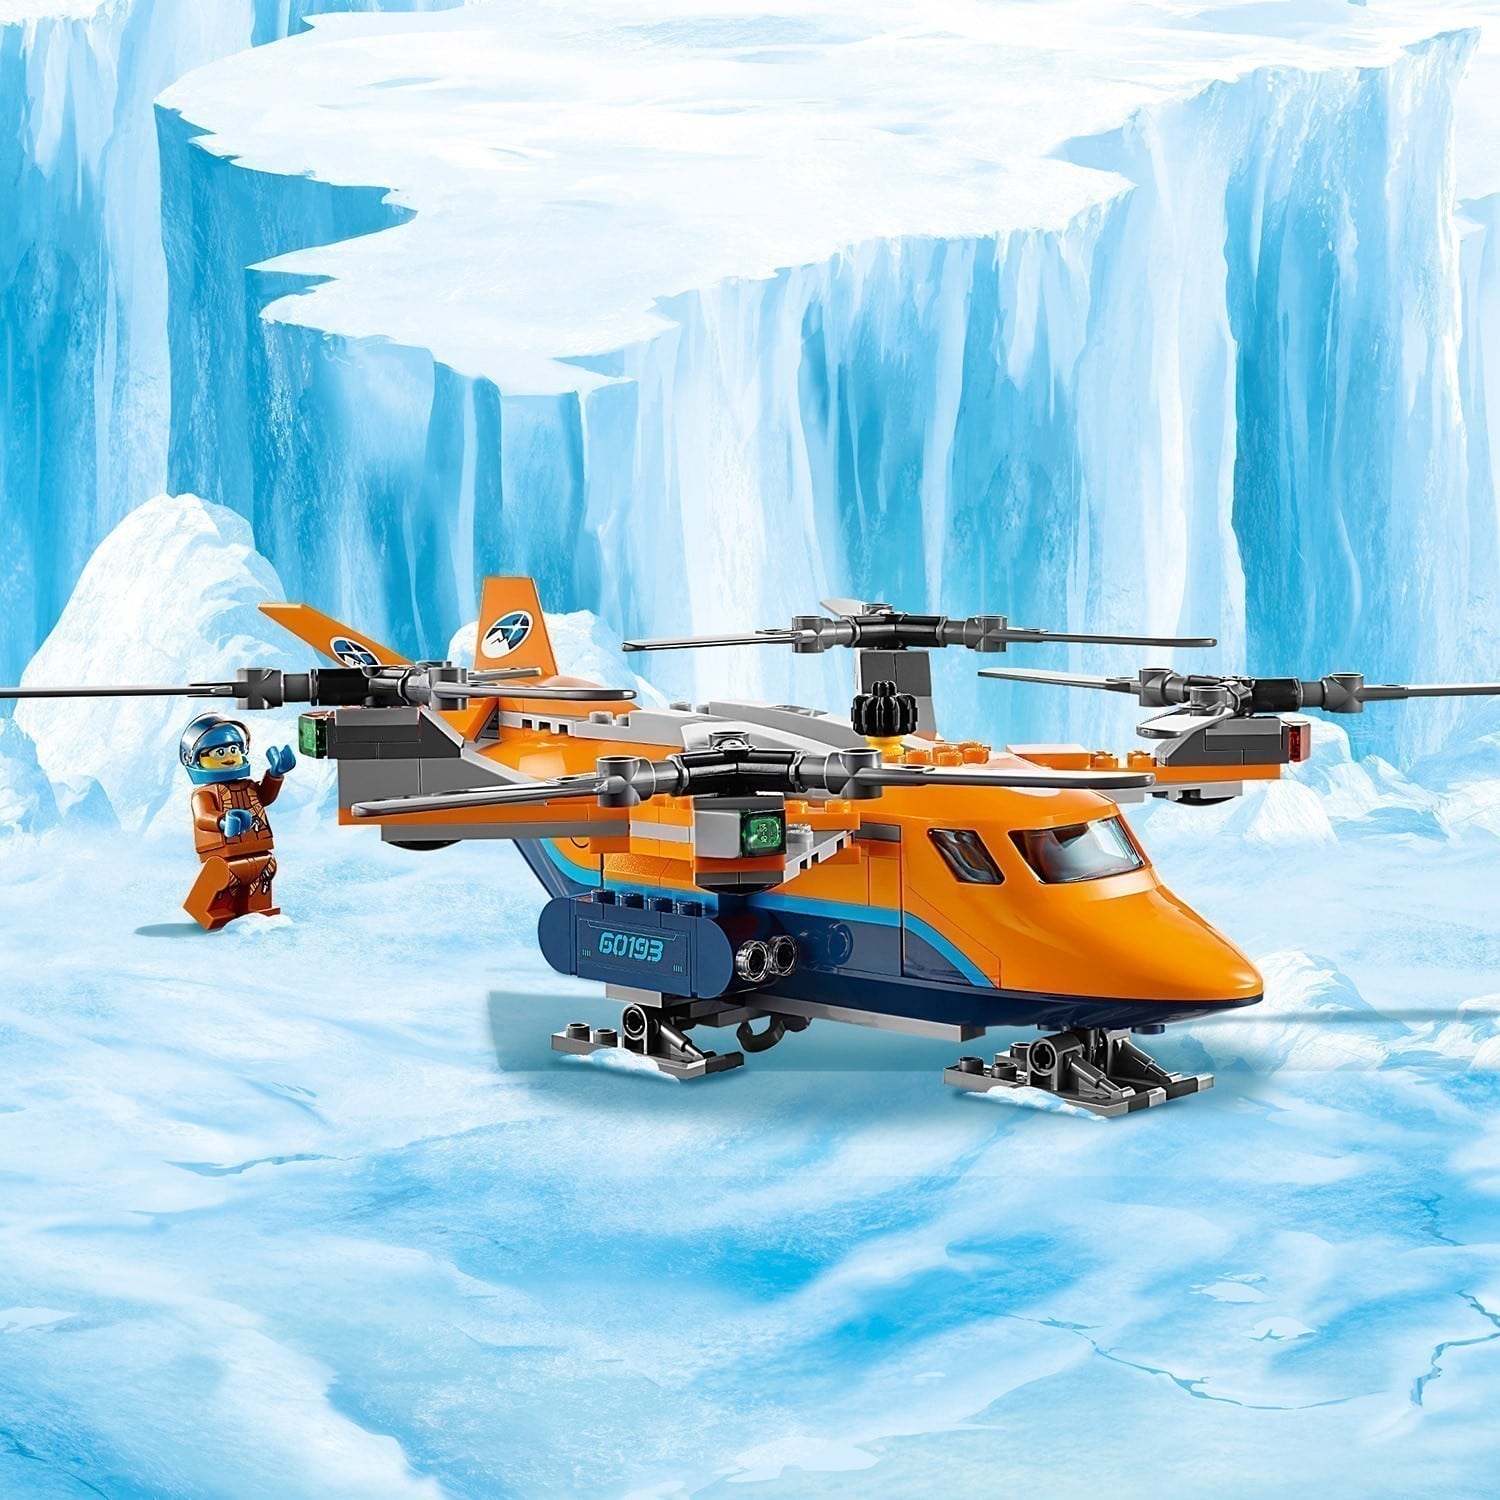 LEGO® City 60193 - Arctic Air Transport